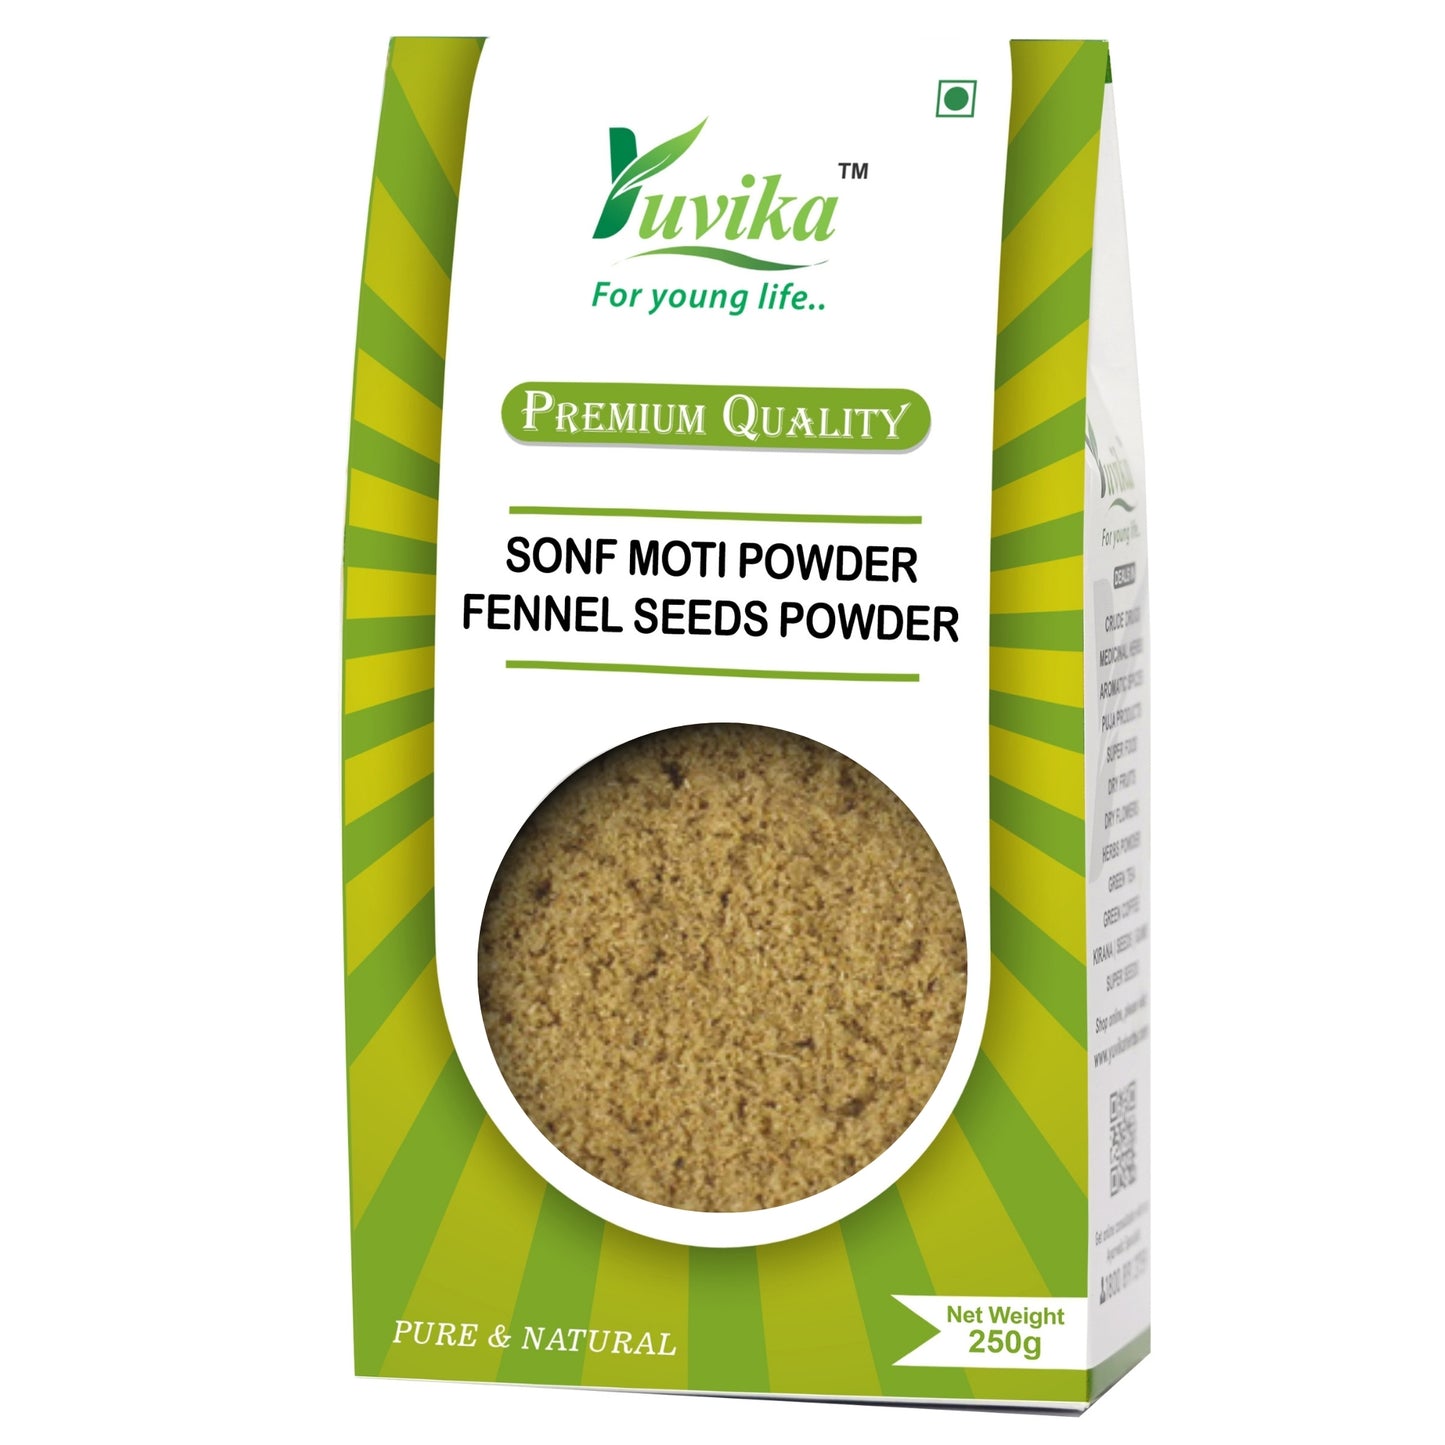 Sonf Moti Powder - Saunf Moti Powder - Foeniculum Vulgare - Fennel Seeds Powder (250g)